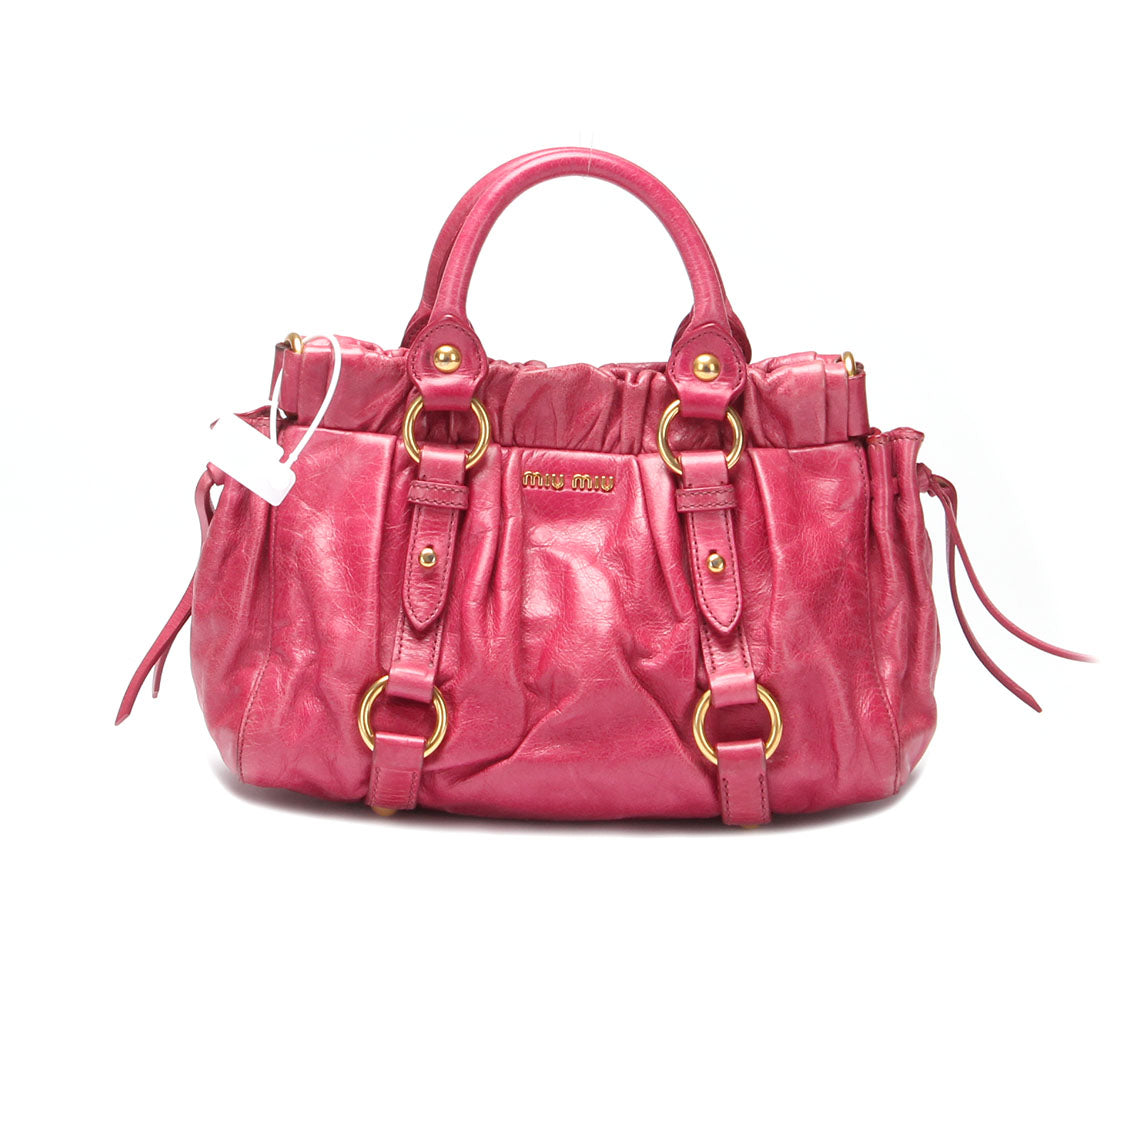 Miu Miu Vitello Lux Gathered Leather Handbag Leather Handbag in Good condition